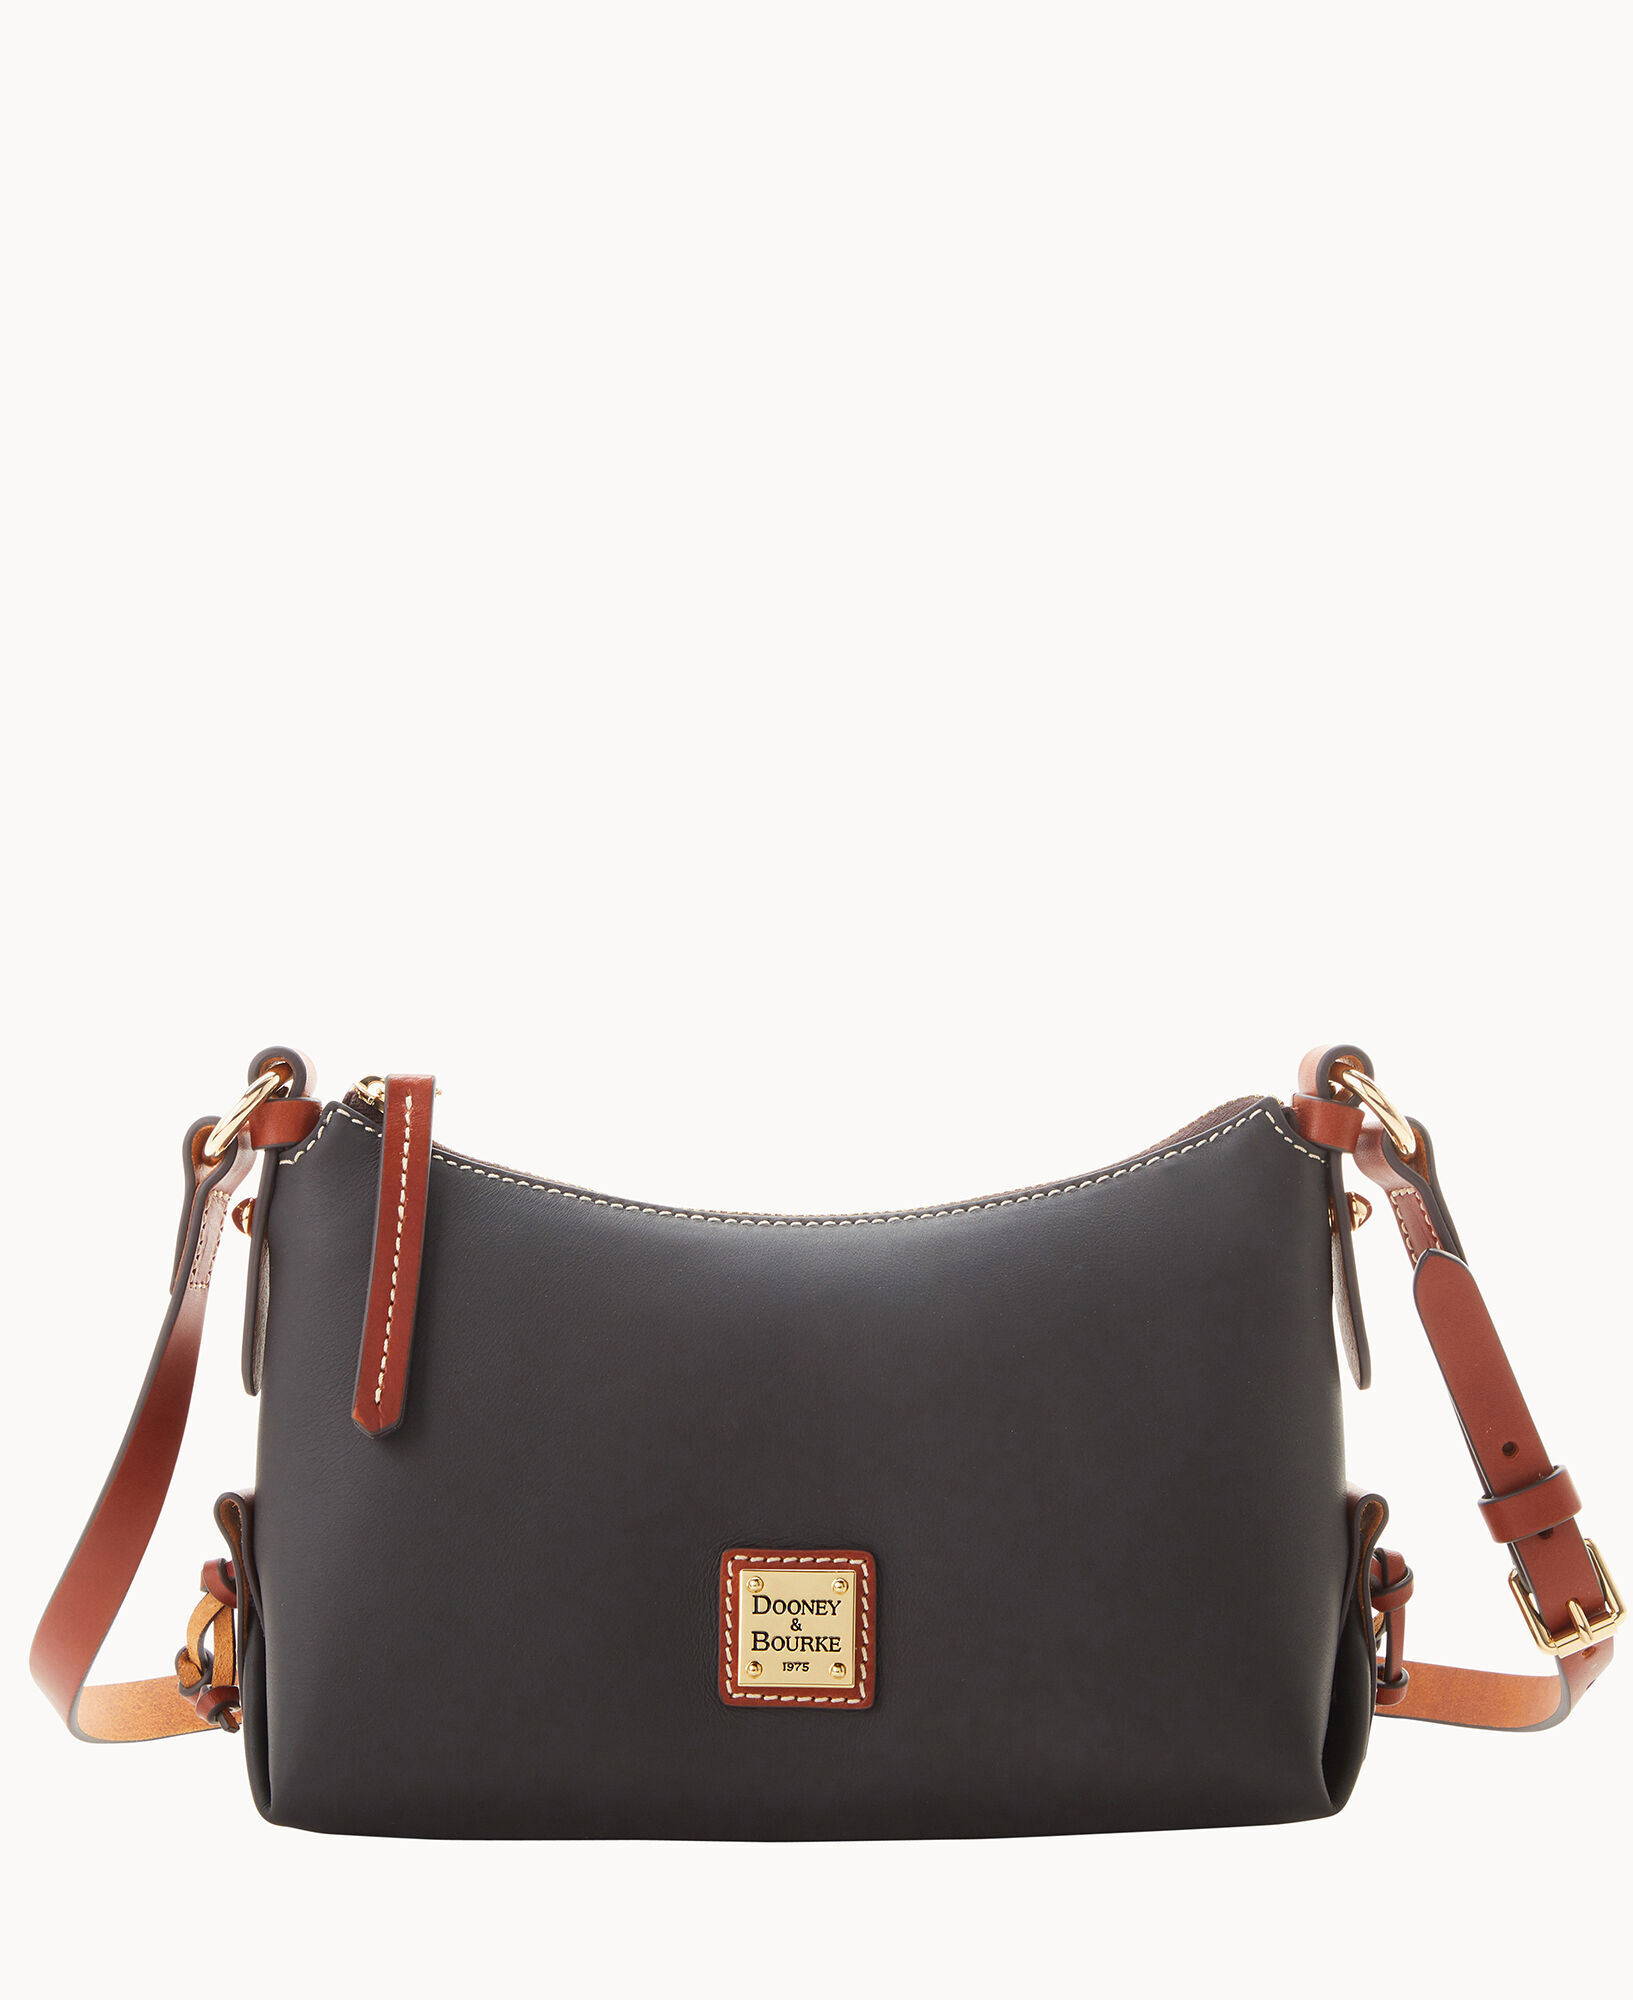 Dooney And Bourke Summer Handbags Best Sale | bellvalefarms.com